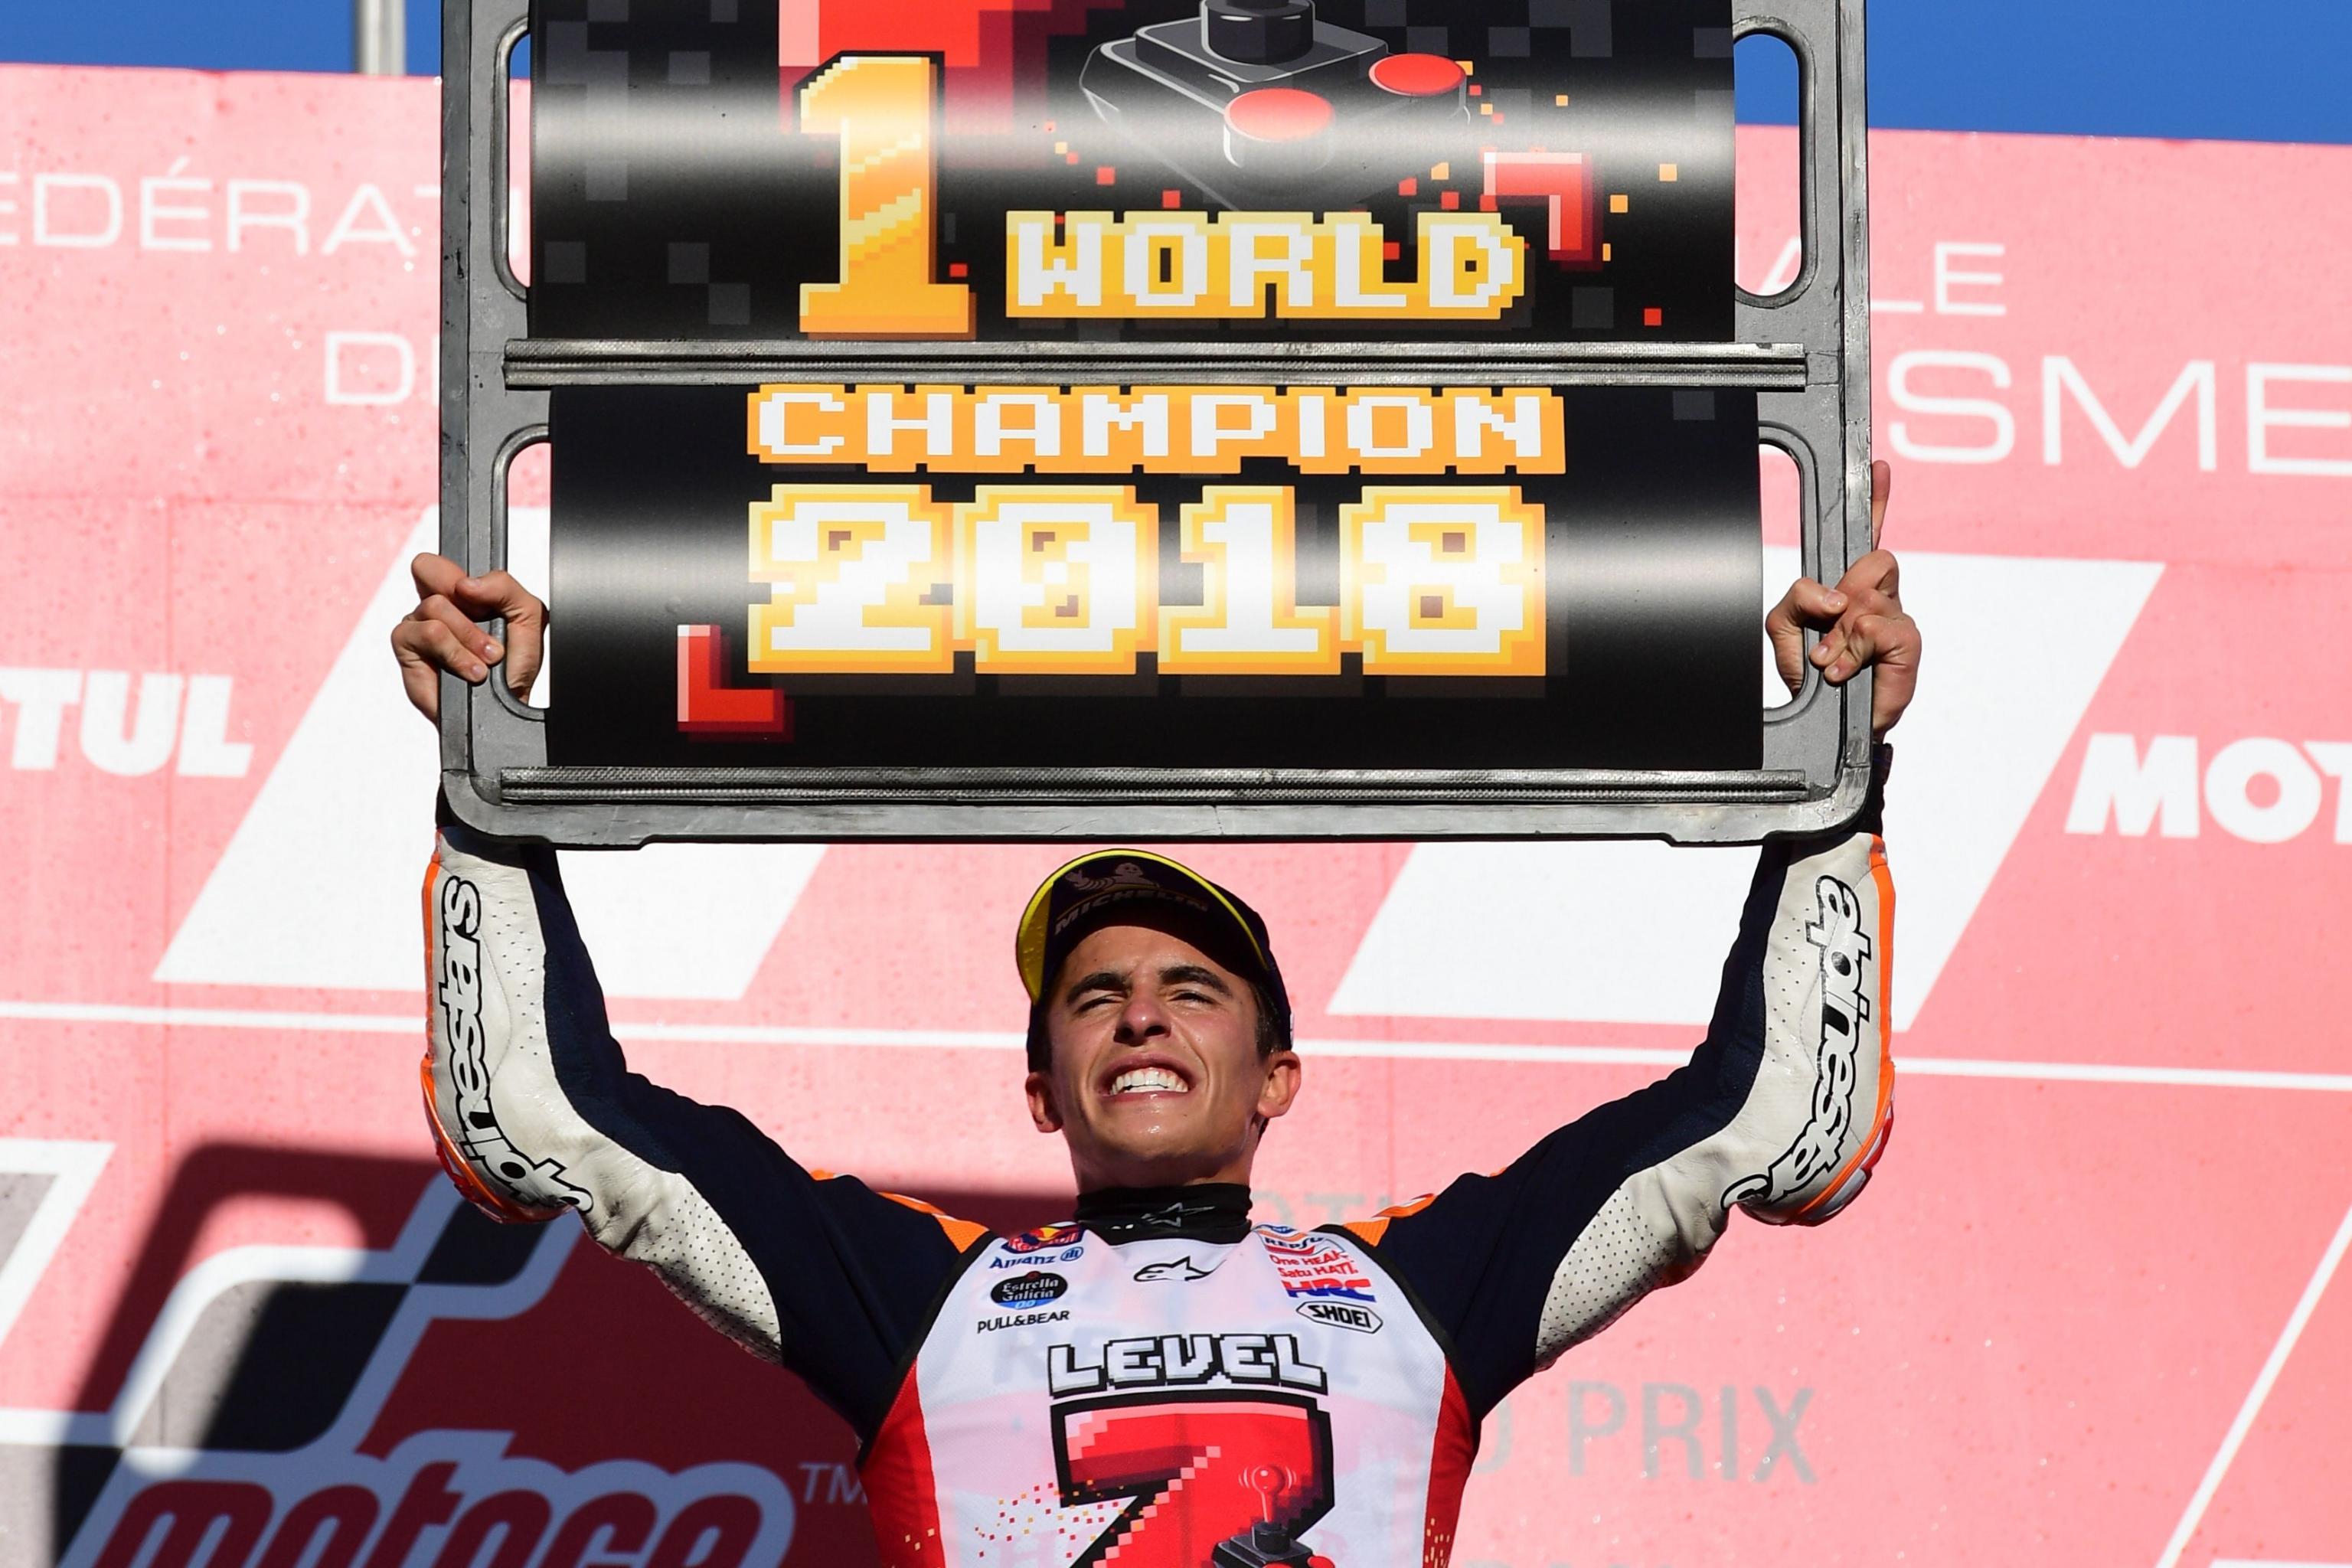 Marc Marquez Crowned 2018 Motogp World Champion After Japan Grand